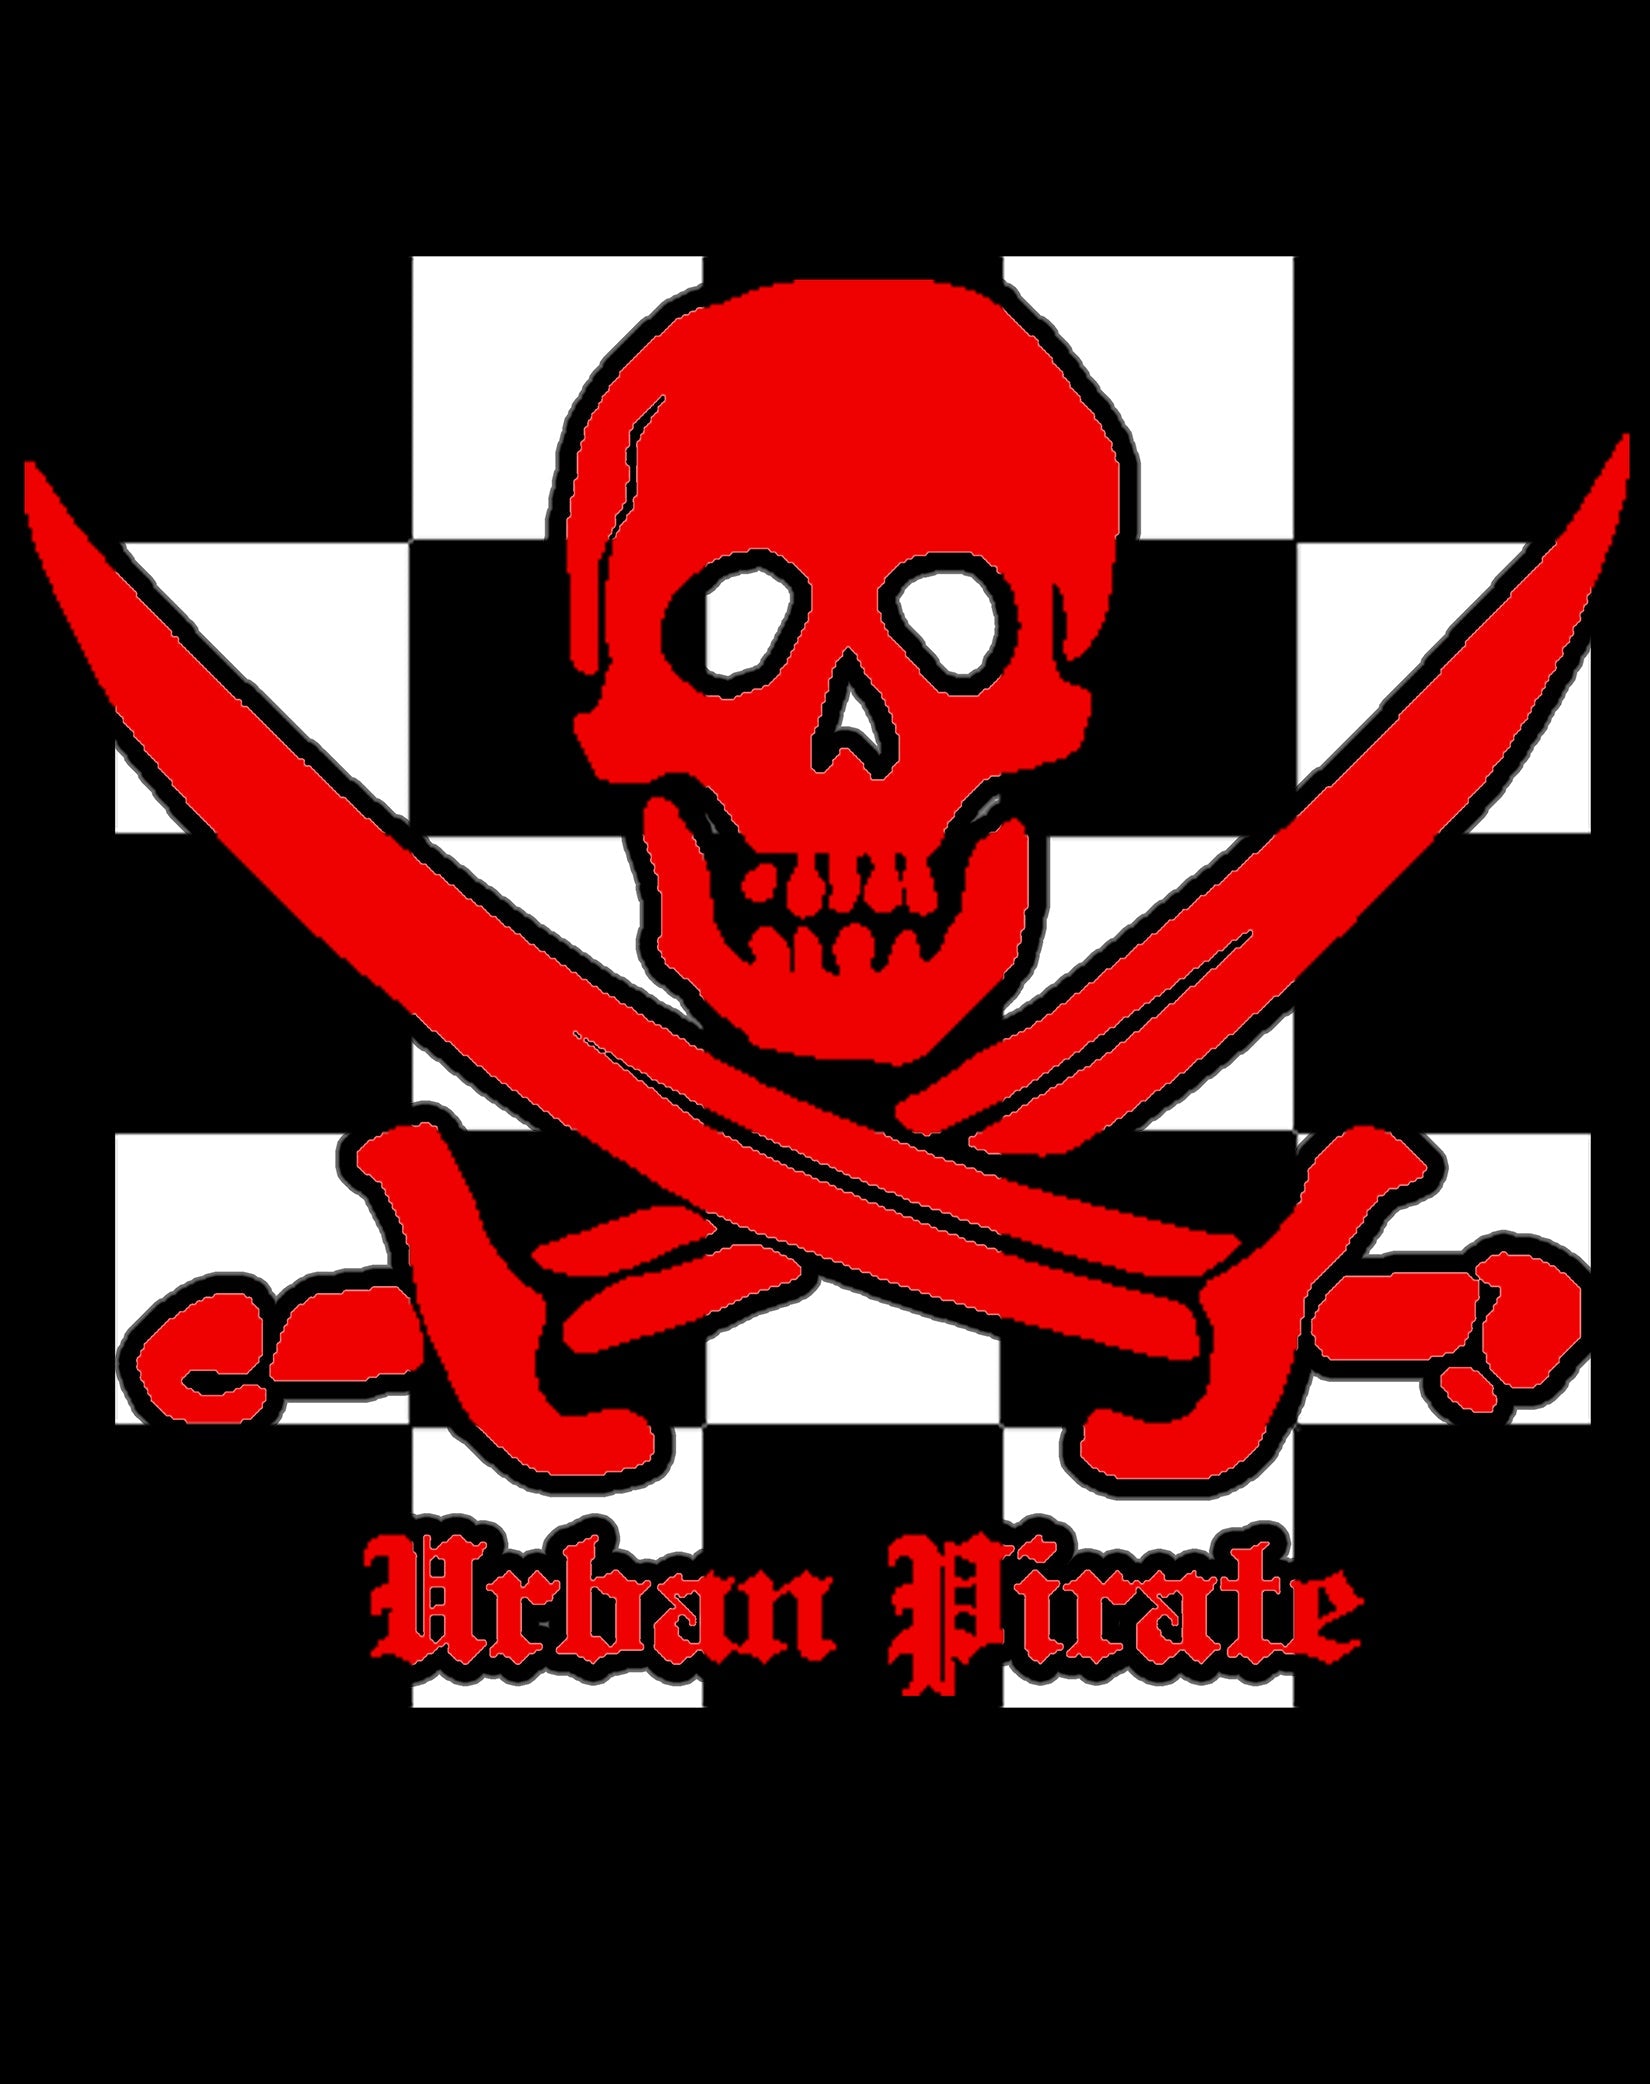 US Brand X Sci Funk Urban Pirate Official Men's T-Shirt ()